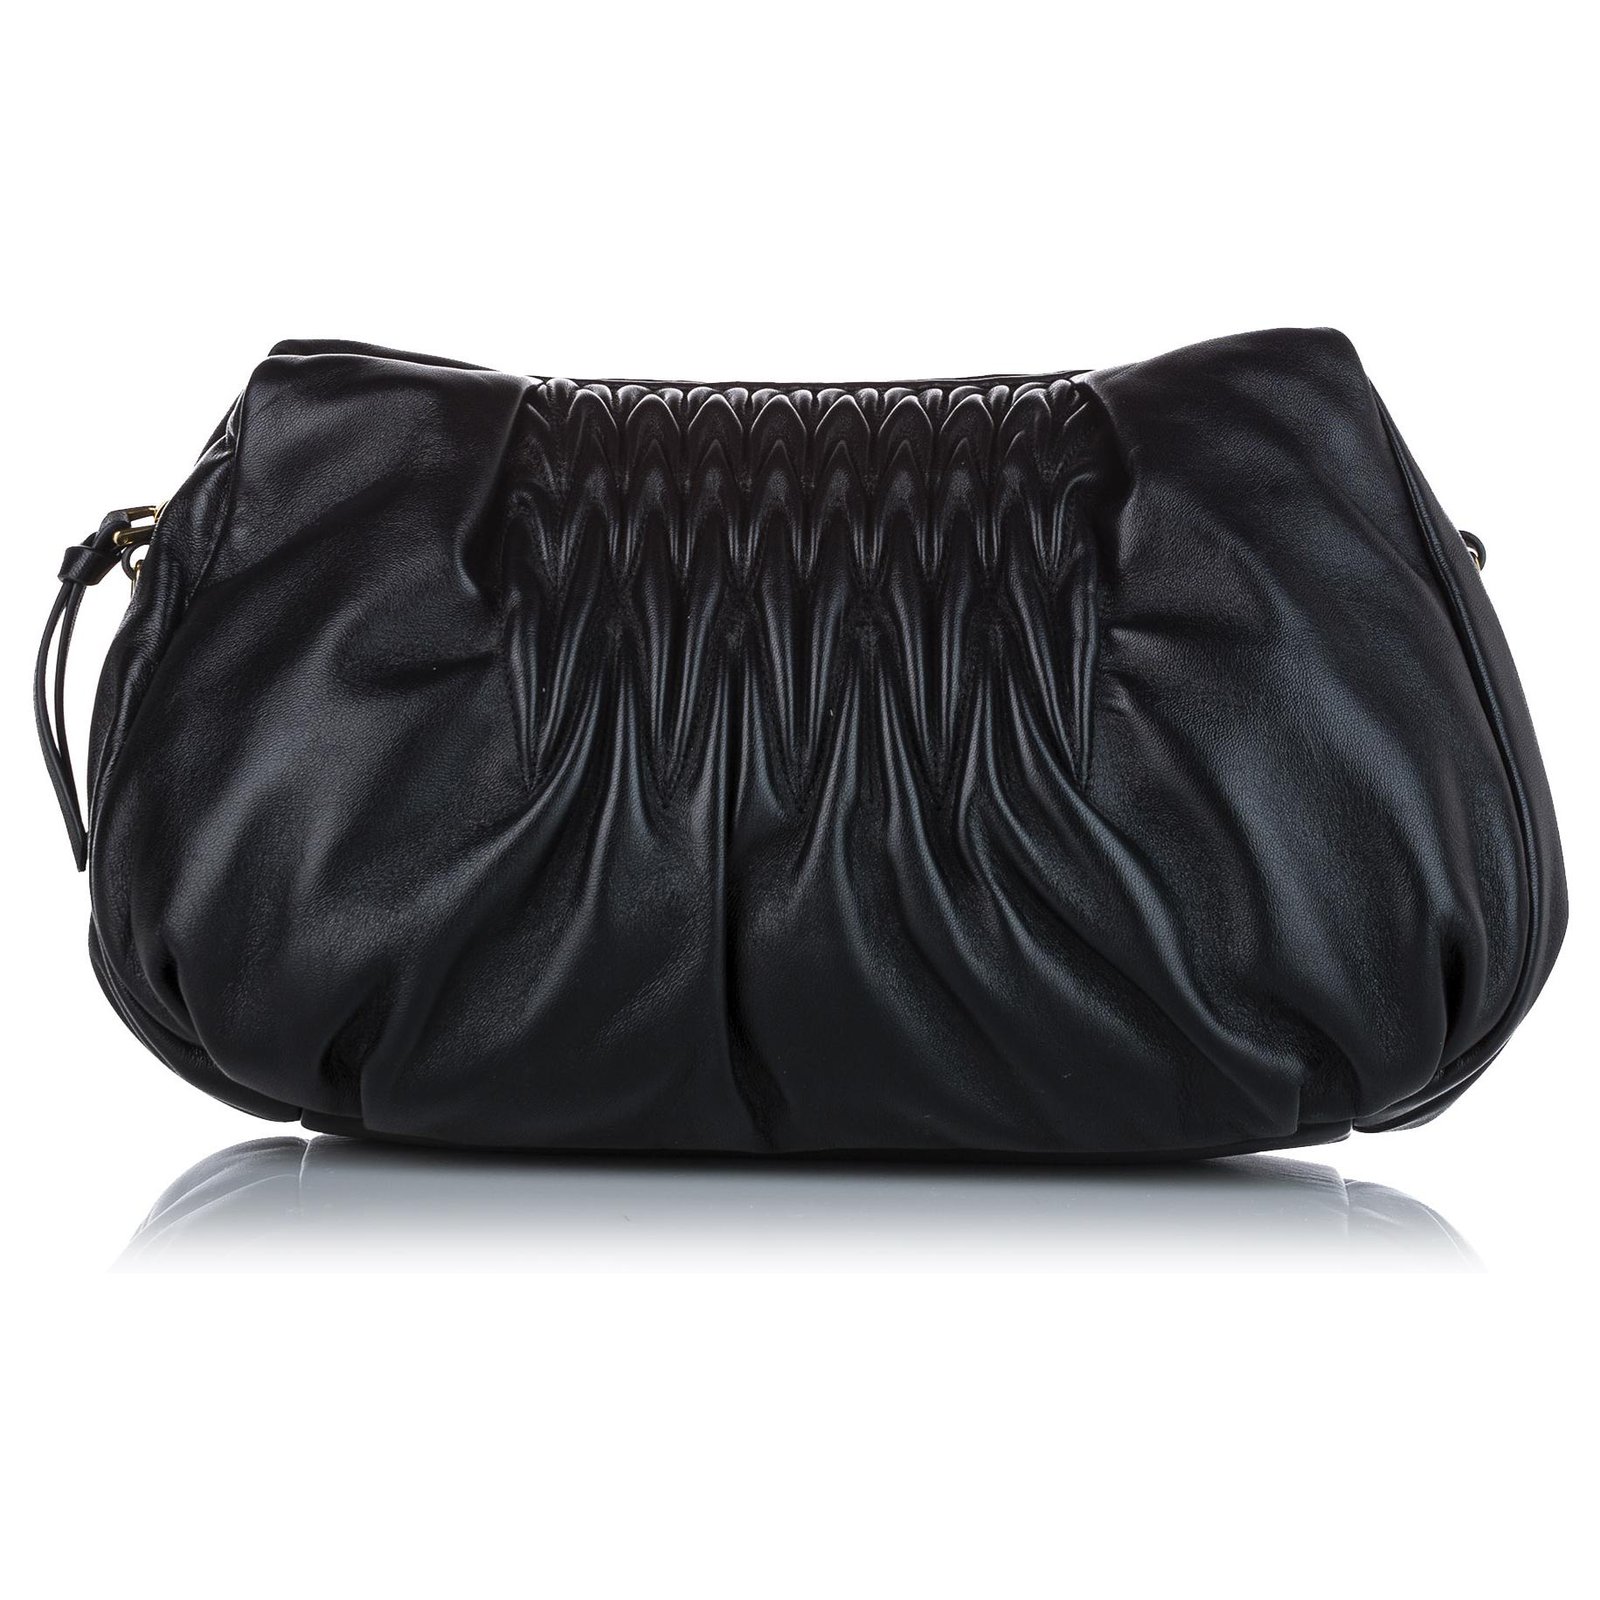 Miu Miu Nappa Leather Pocket Bag in Black